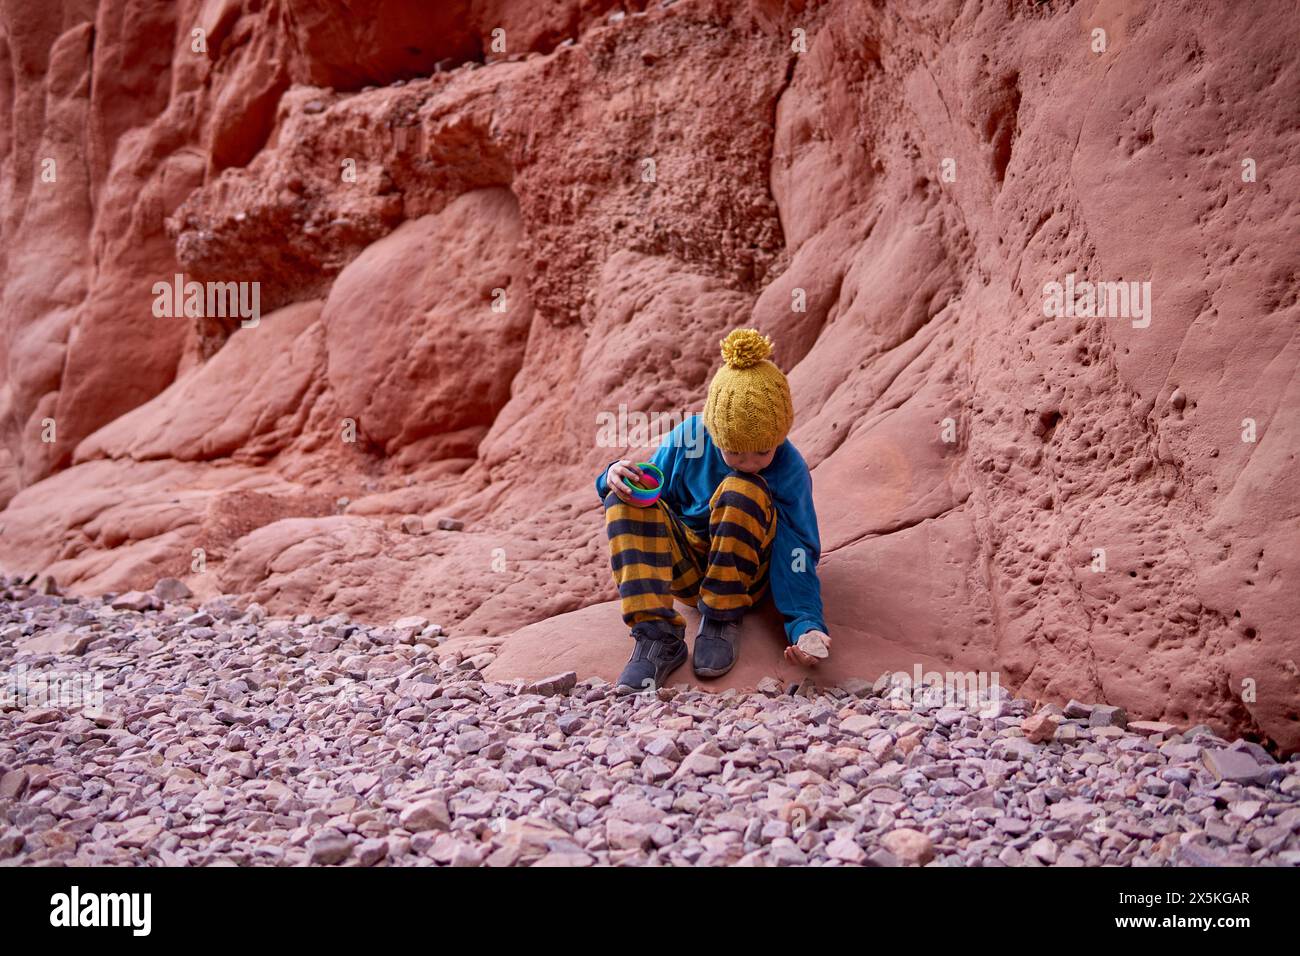 Ragazzo latino seduto su una montagna rocciosa che guarda giù raccogliendo ciottoli durante le vacanze invernali a la Quebrada de las Señoritas a Jujuy, Argentina. Foto Stock